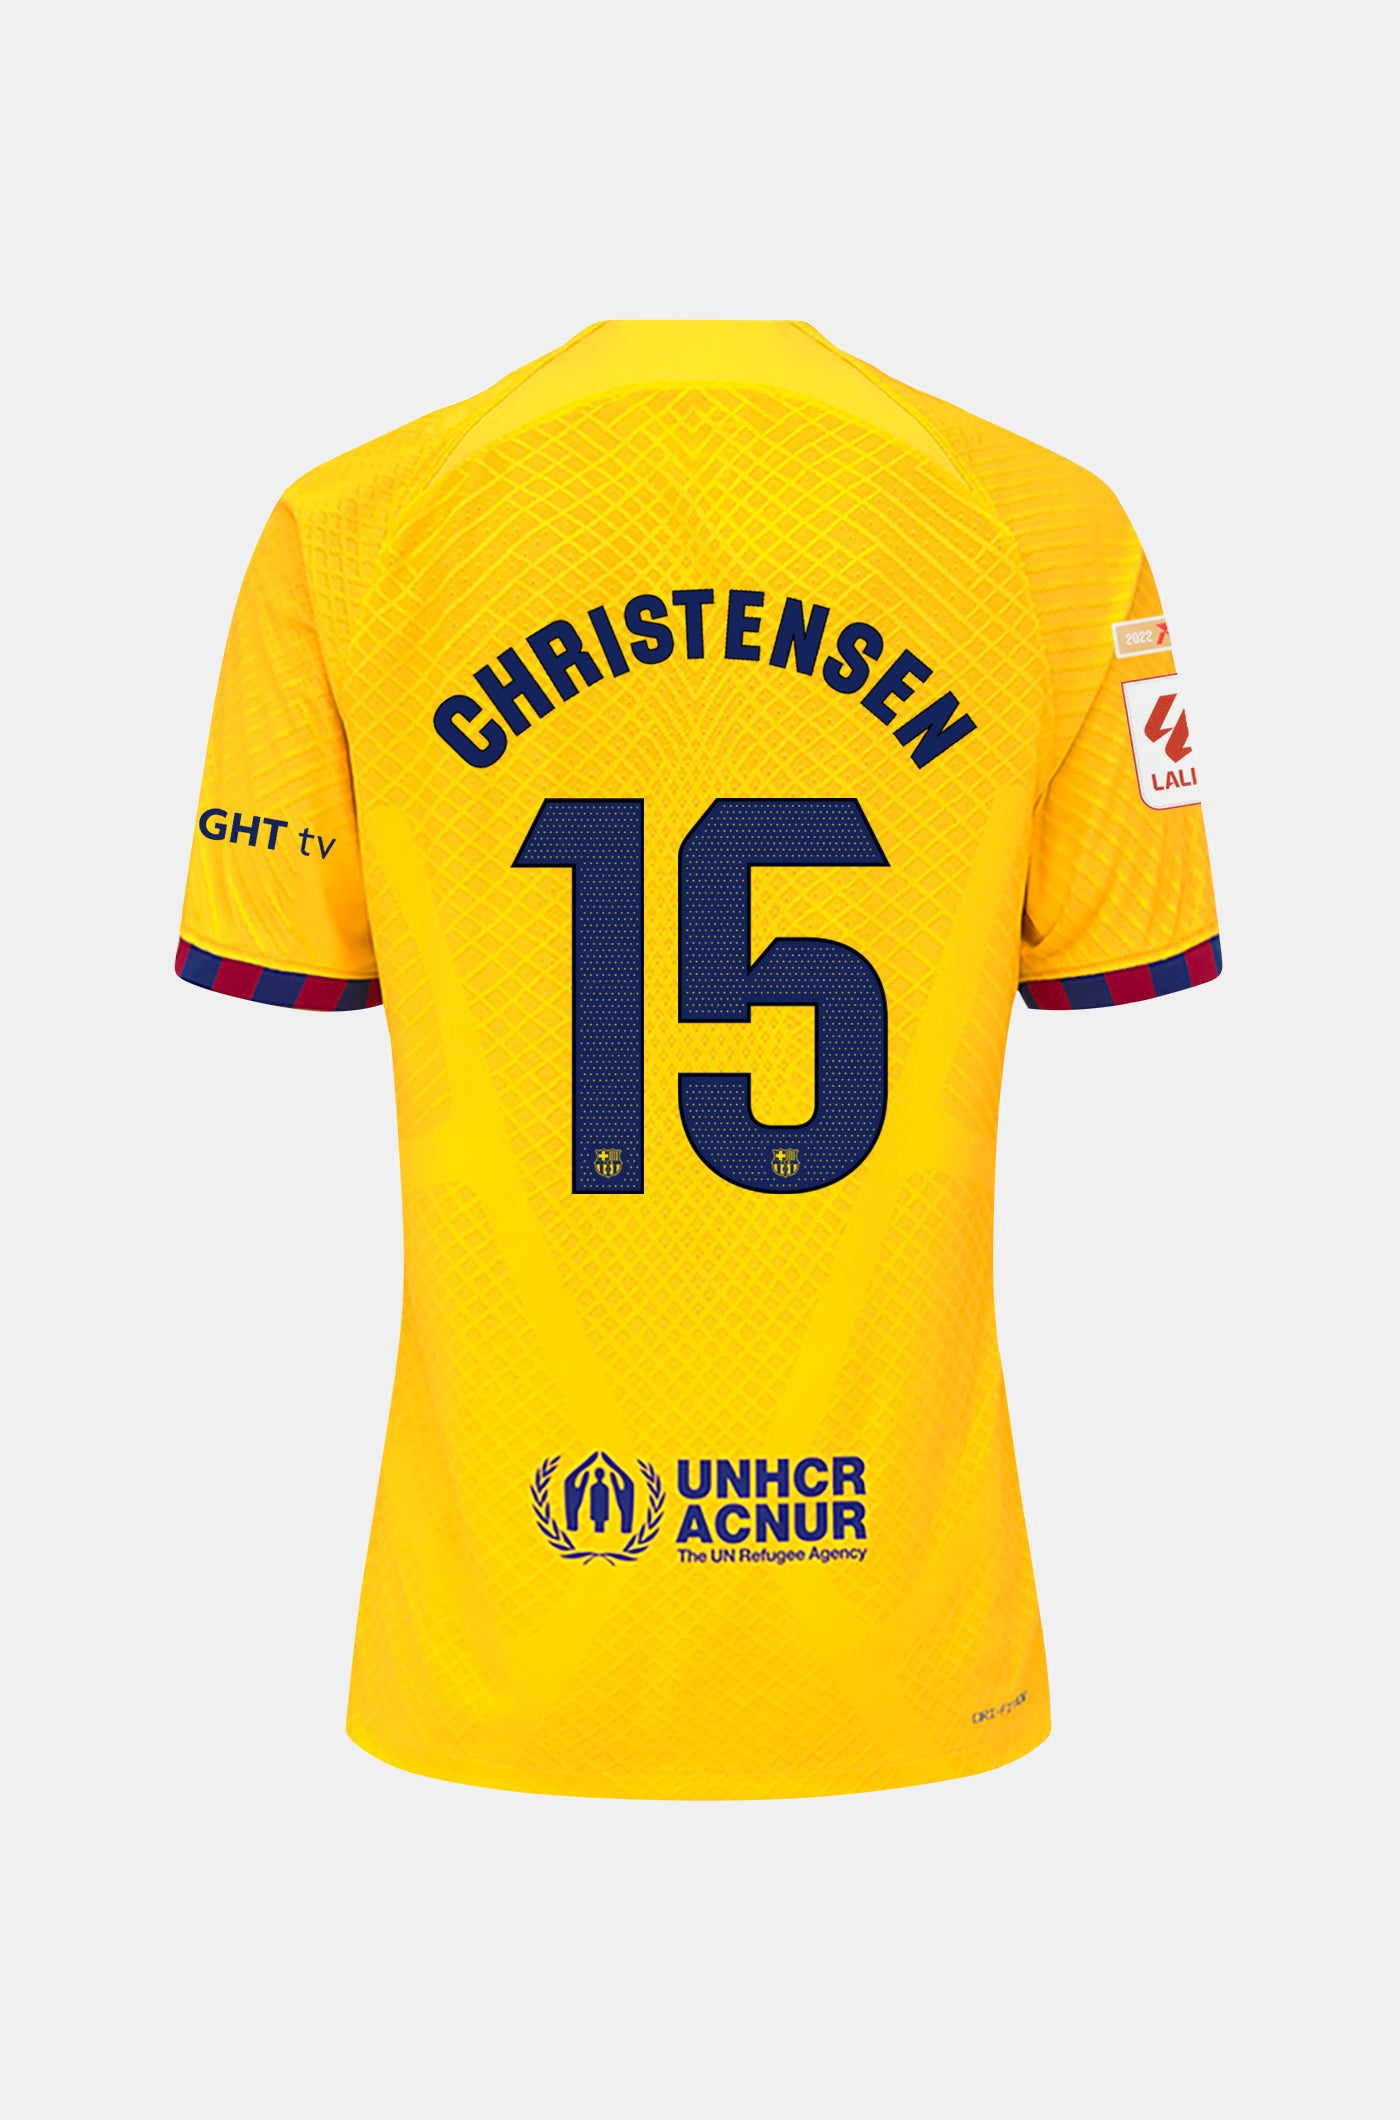 LFP FC Barcelona fourth shirt 23/24 Player’s Edition  - CHRISTENSEN